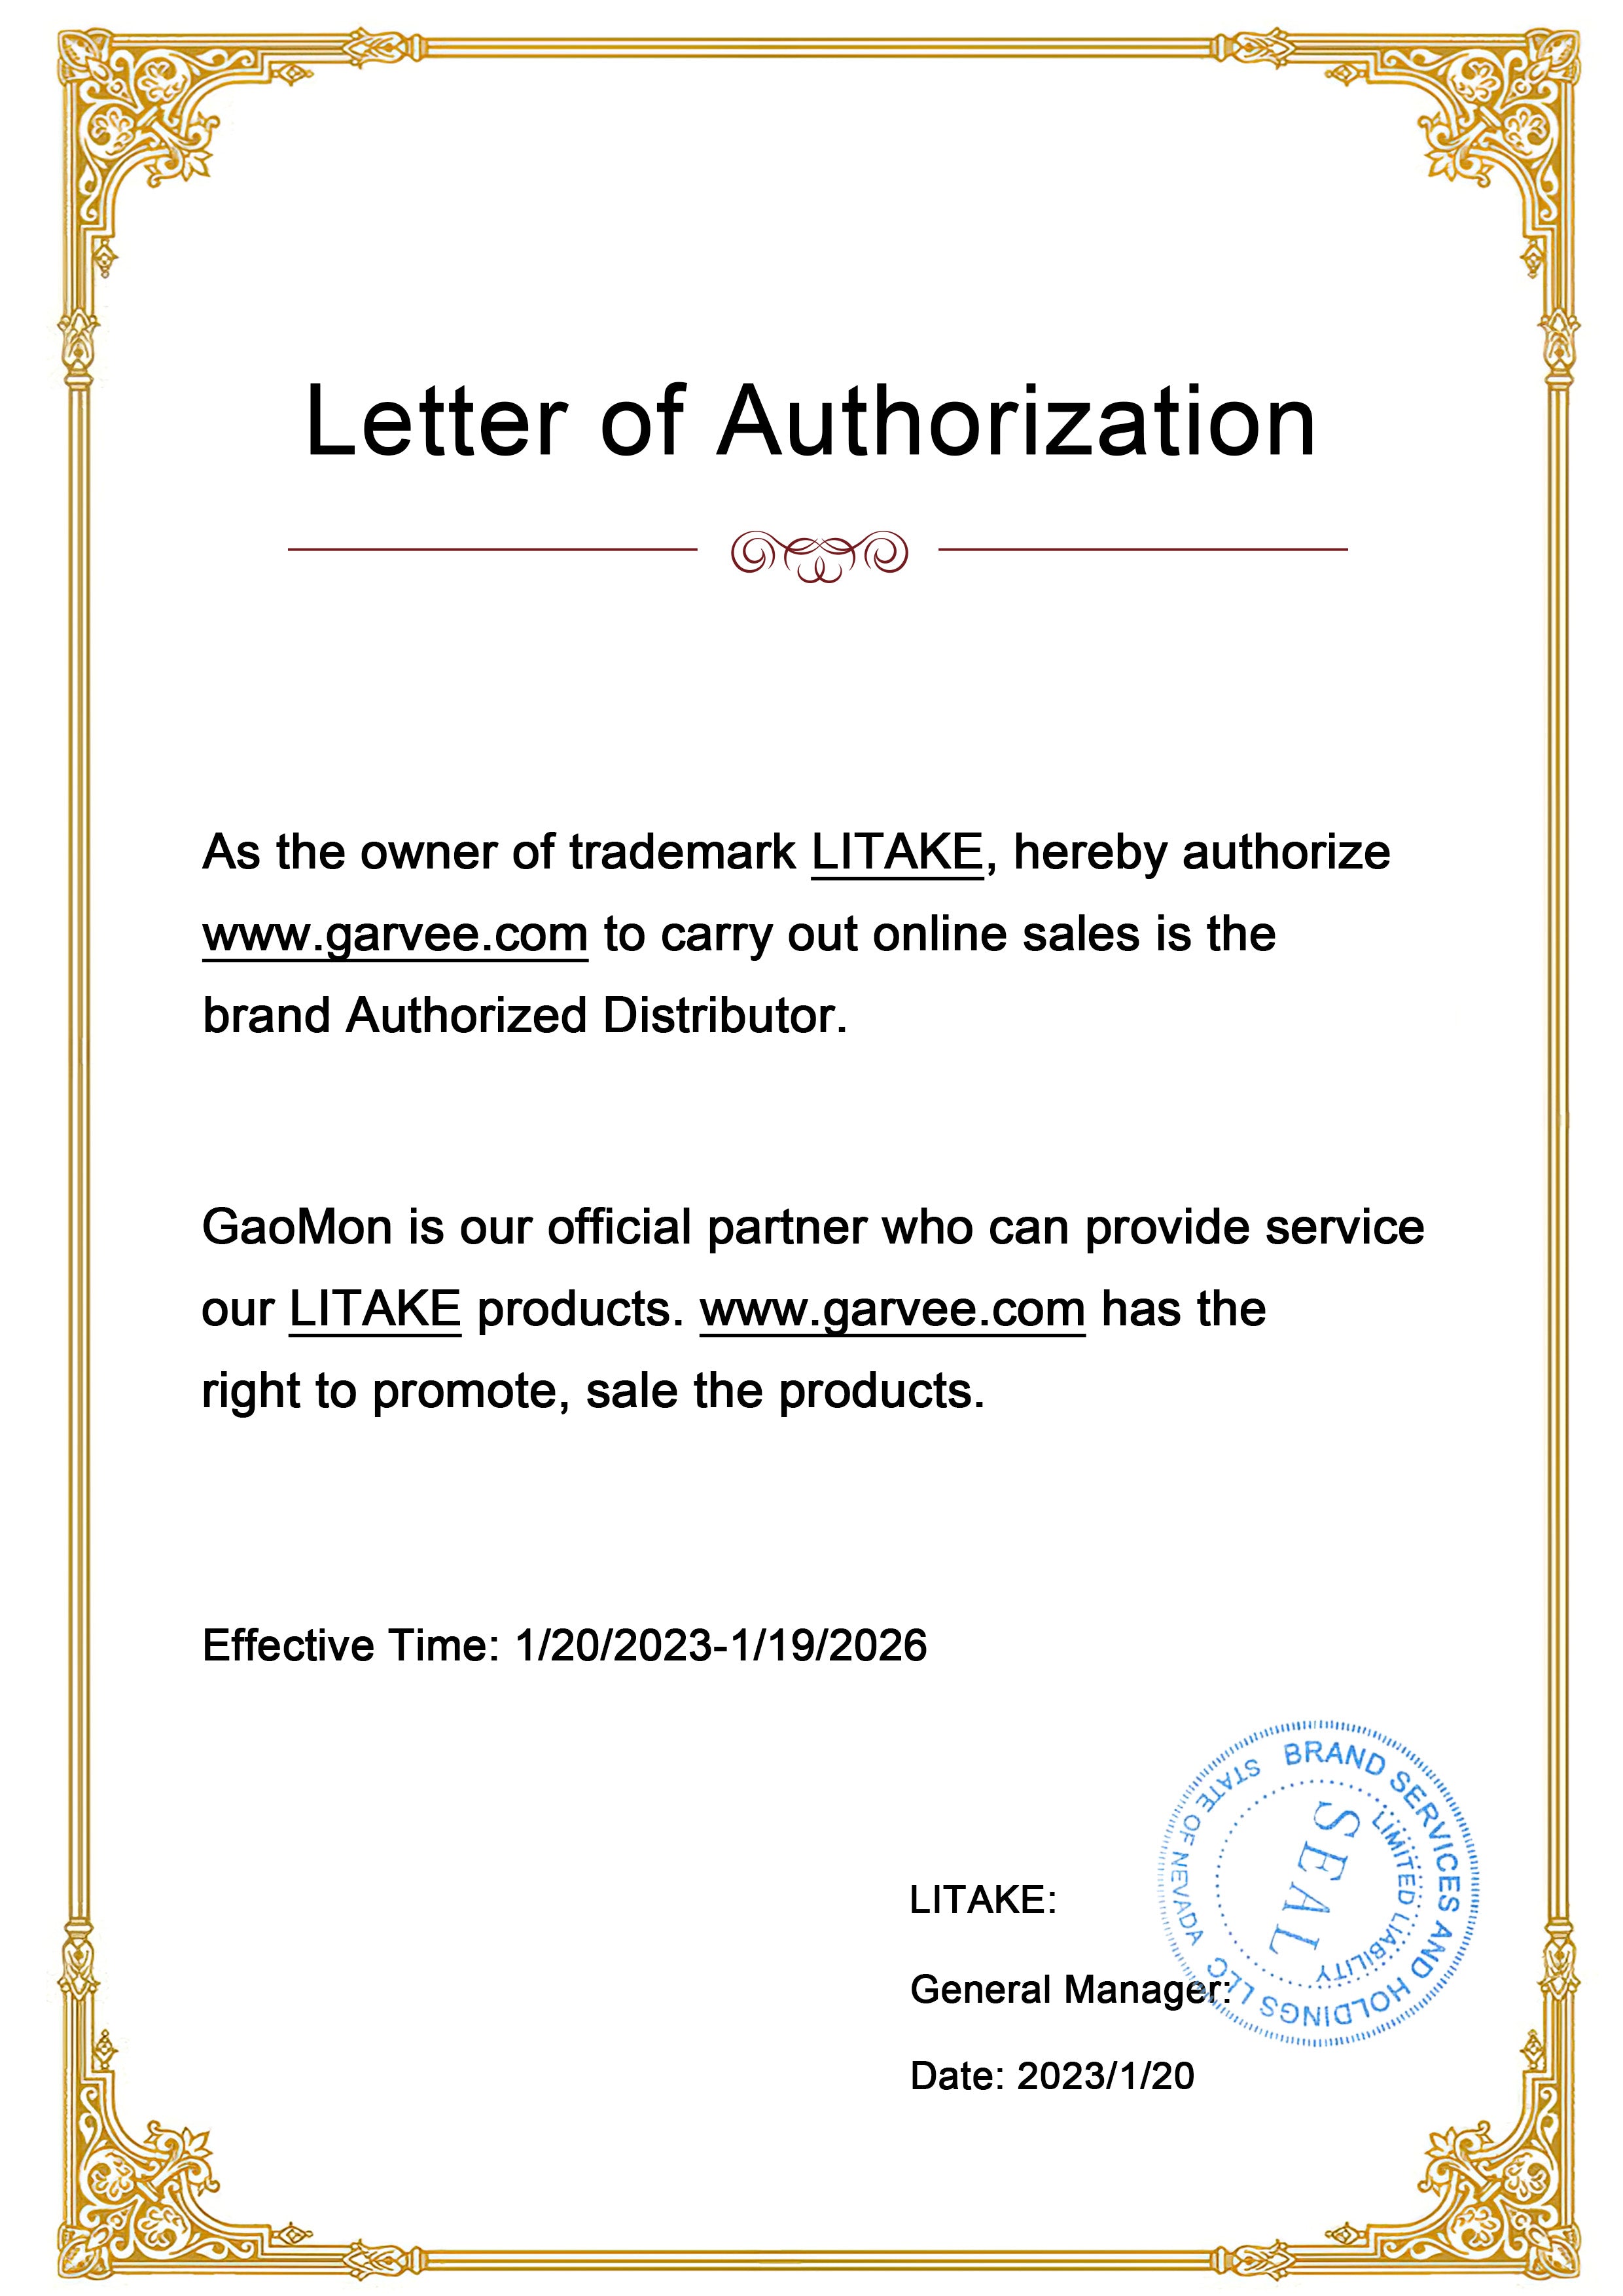 LITAKE Brand Authorization